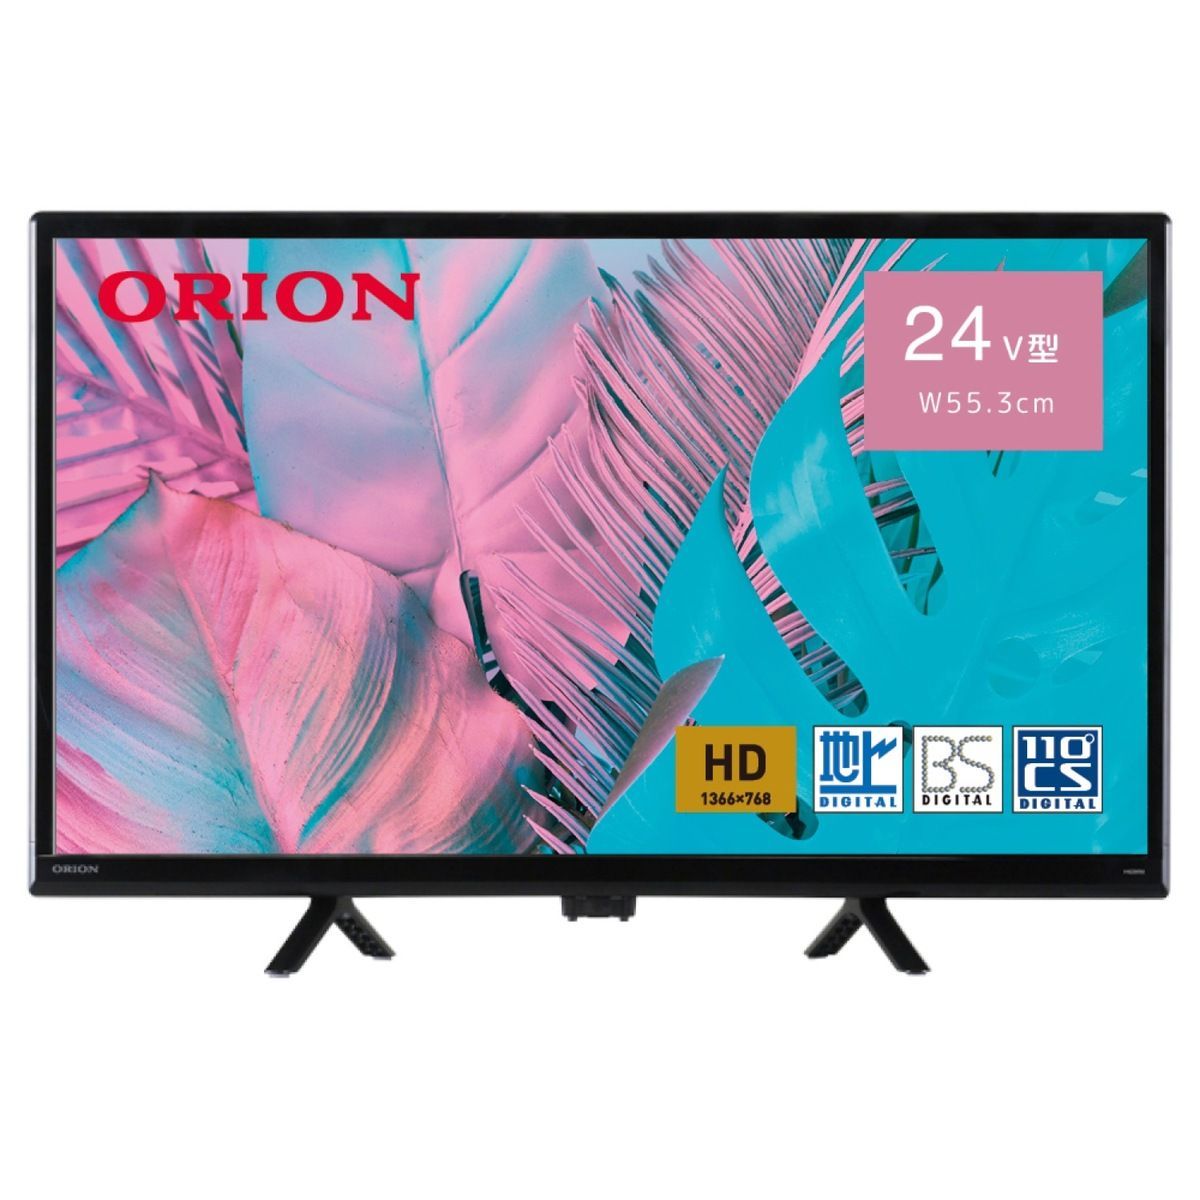 ORION OL24WD300 24V型 液晶テレビ 外付HDD録画 (M)-0